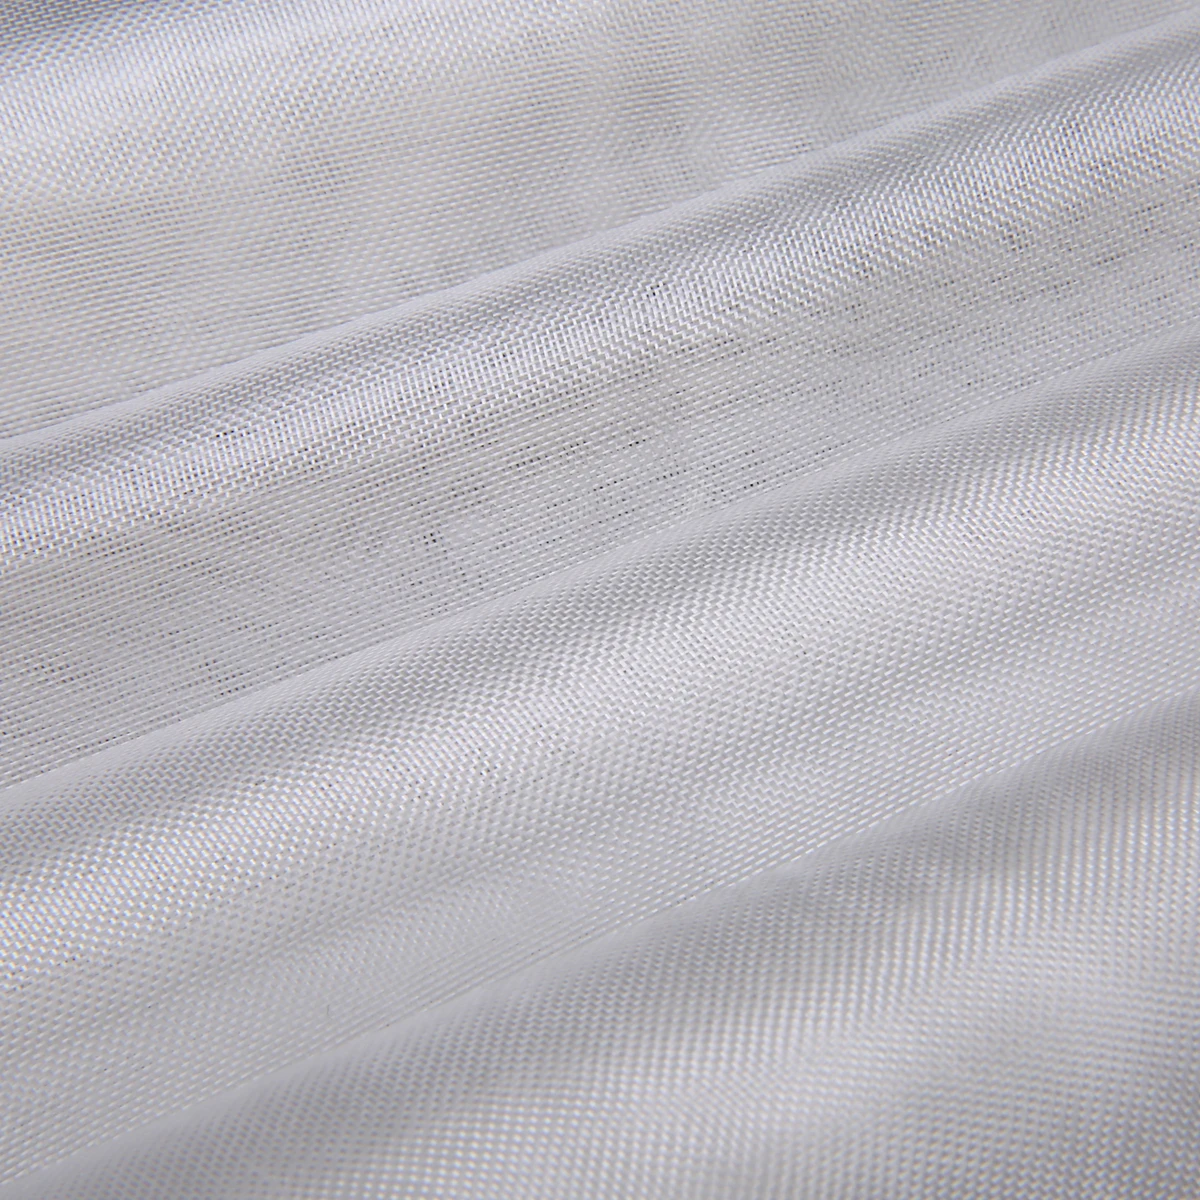 Fiber Glass Fabric 0.03mm Ultra Thin White Fiberglass Cloth Reinforcements 50" * 39" Grid Plain Weave Quilting Fabric Tools images - 6